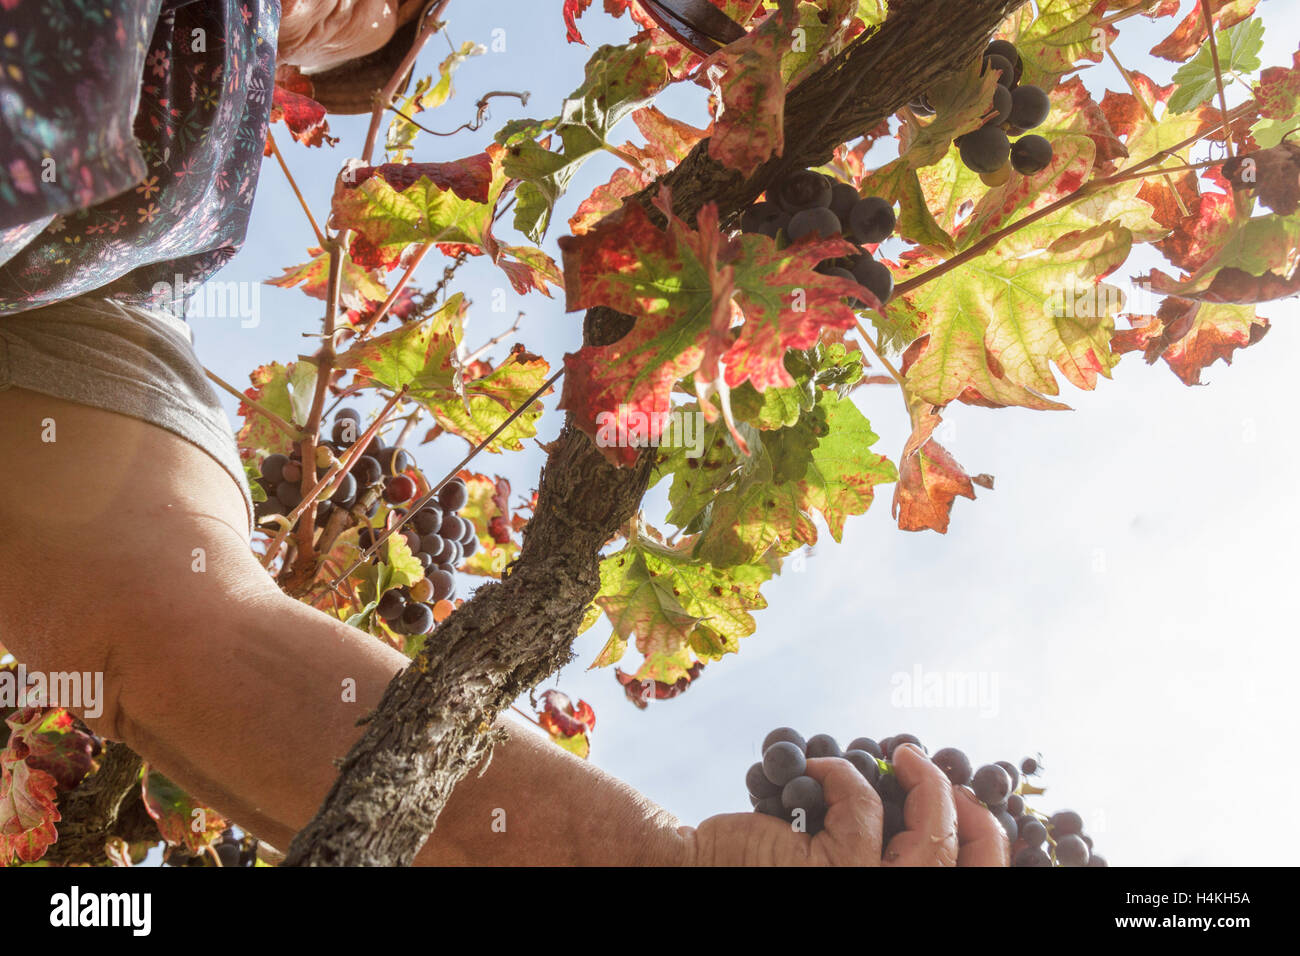 Frau Kommissionierung schwarzen Trauben - niedrigen Winkel - Weinlese - Serra Da Estrela, Portugal Stockfoto